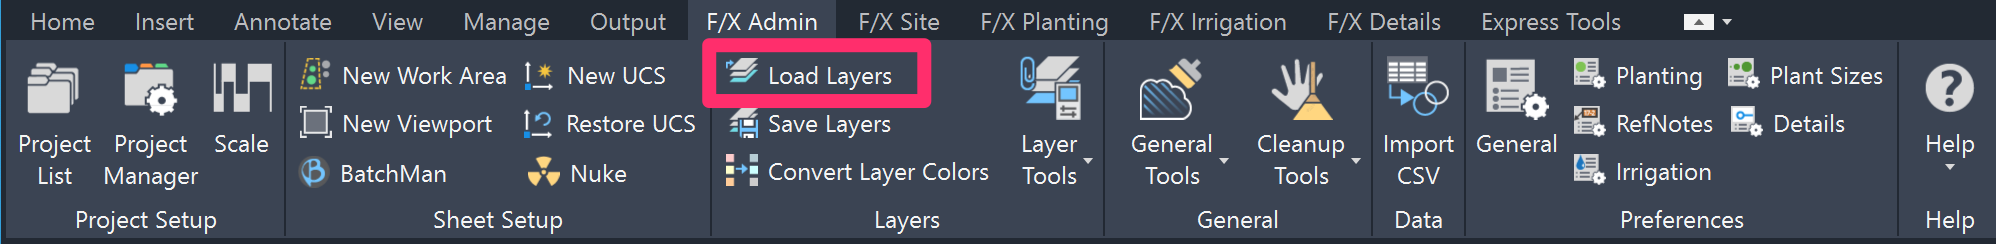 F/X Admin ribbon, Load LAyers button